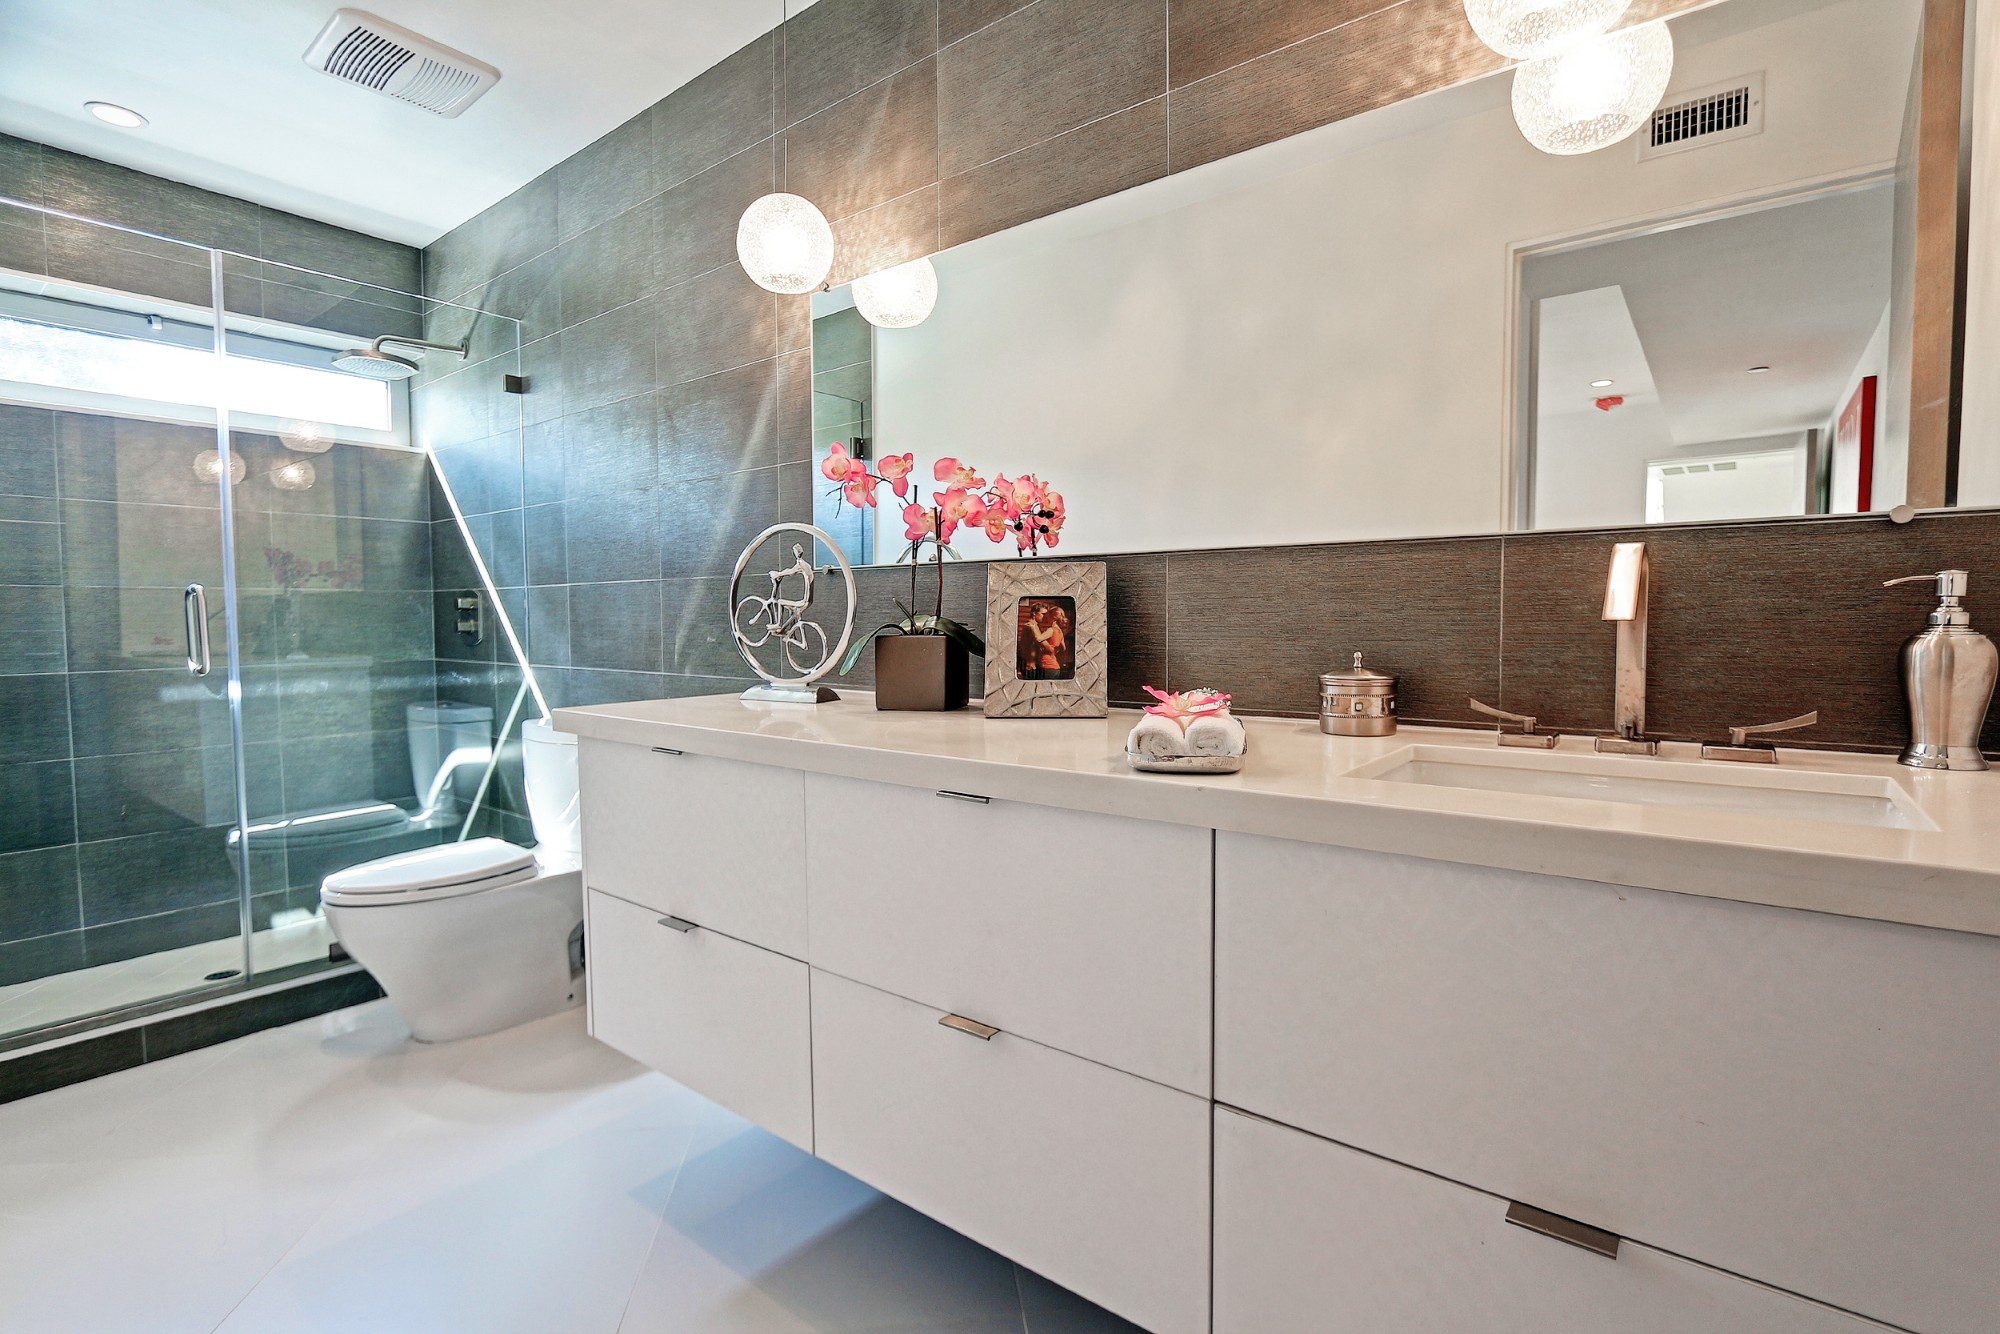 Minimalistic style bathroom featured in modern Beach City home